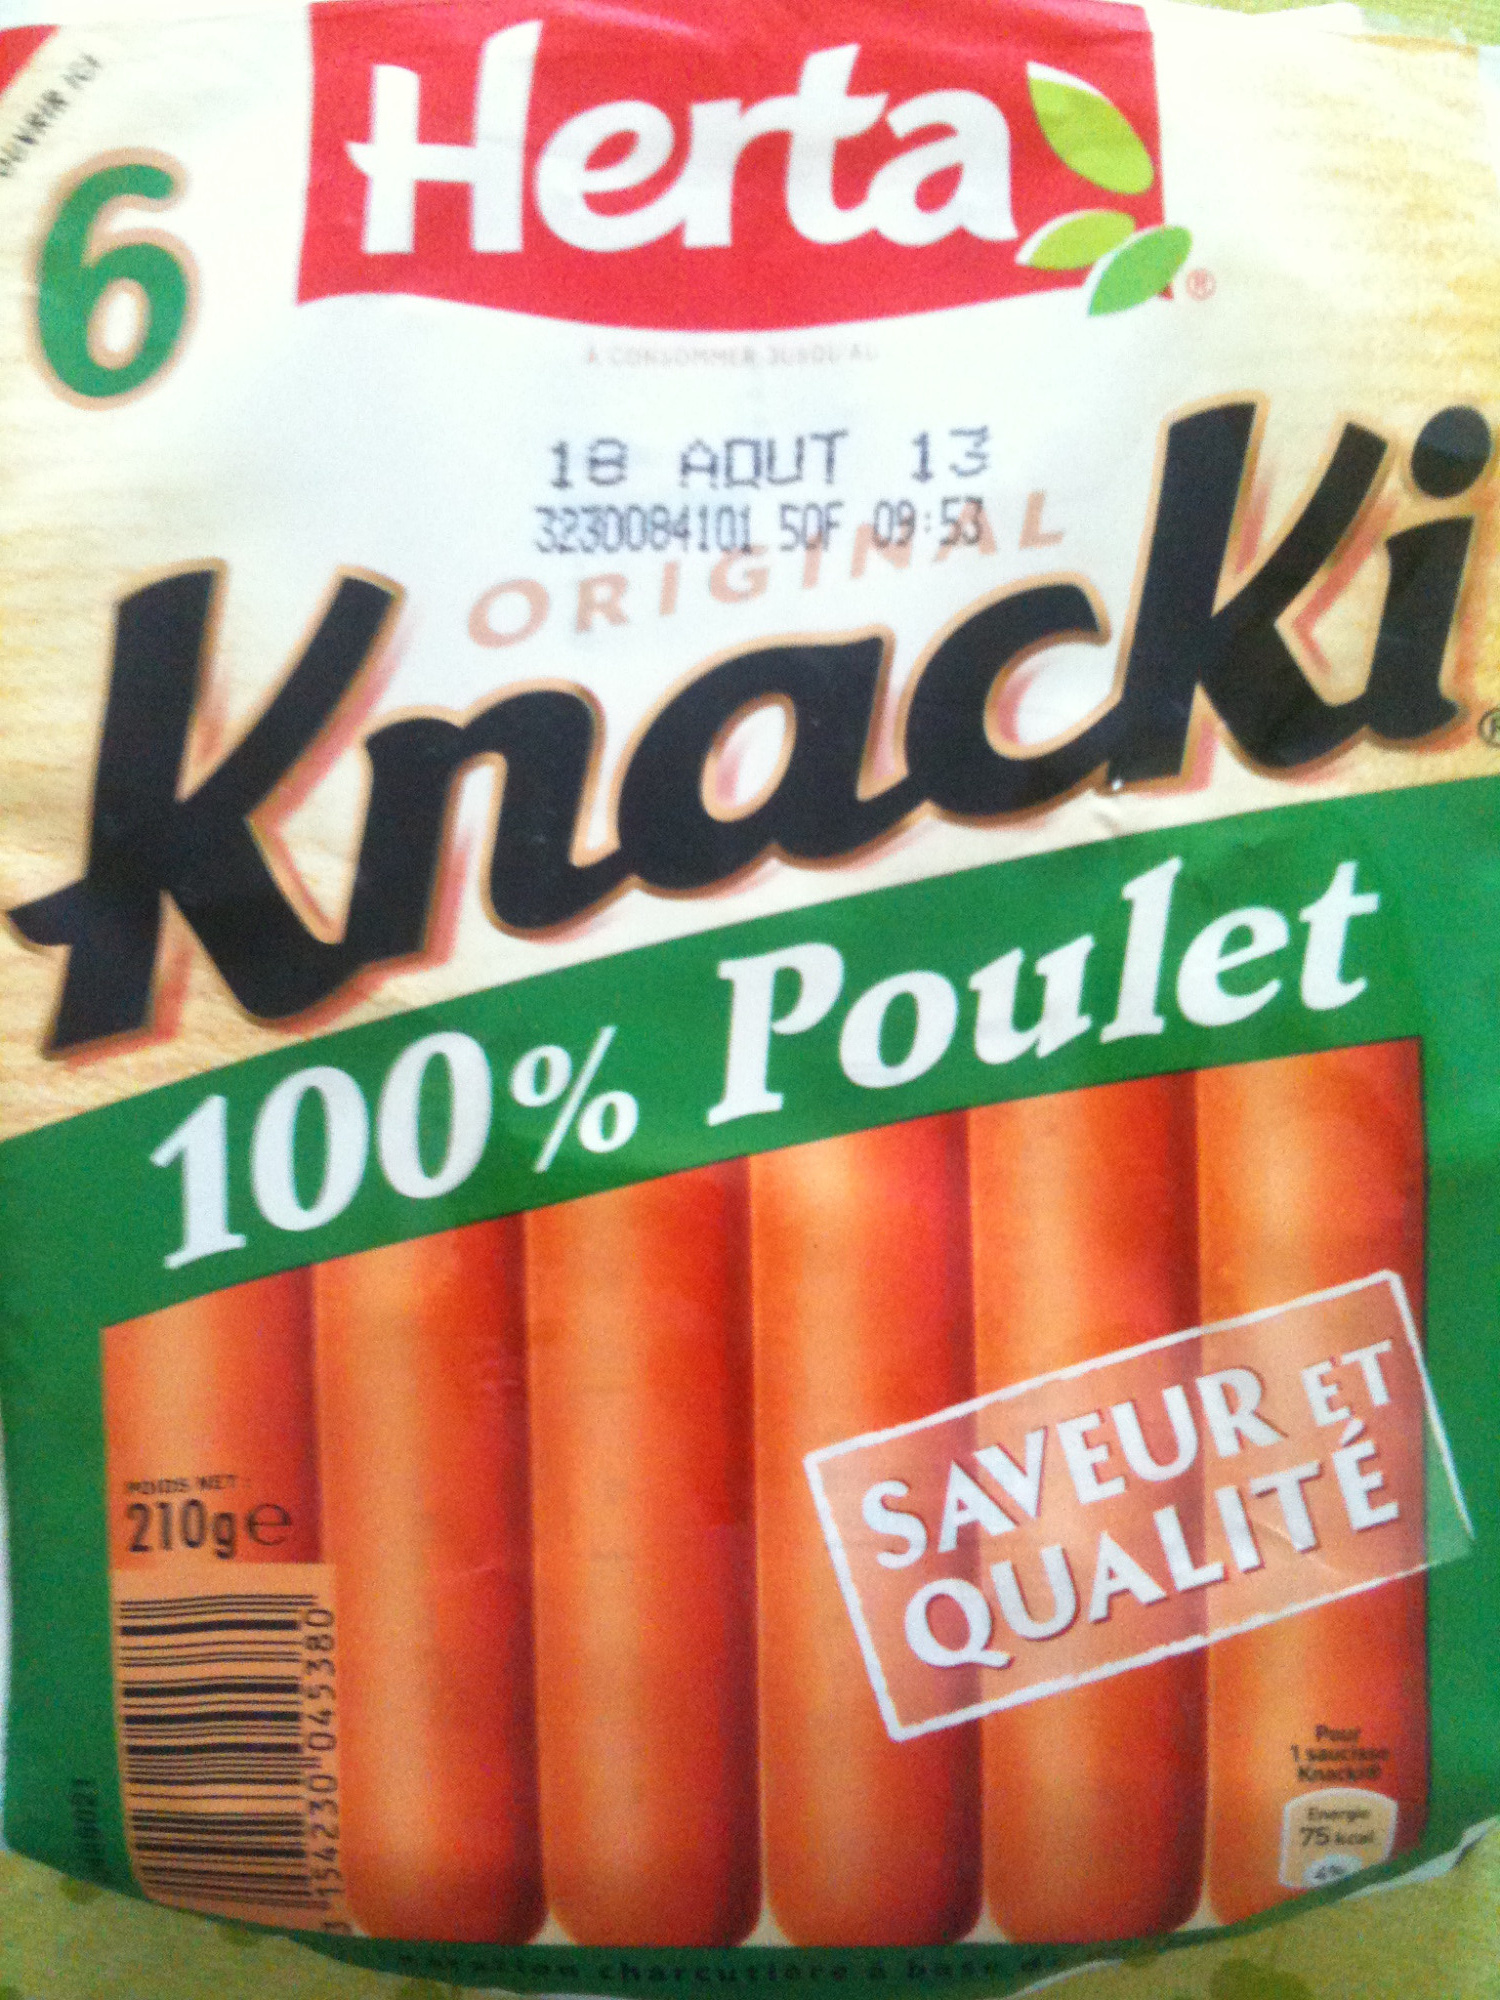 6 Original Knacki, 100 % Poulet - Product - fr